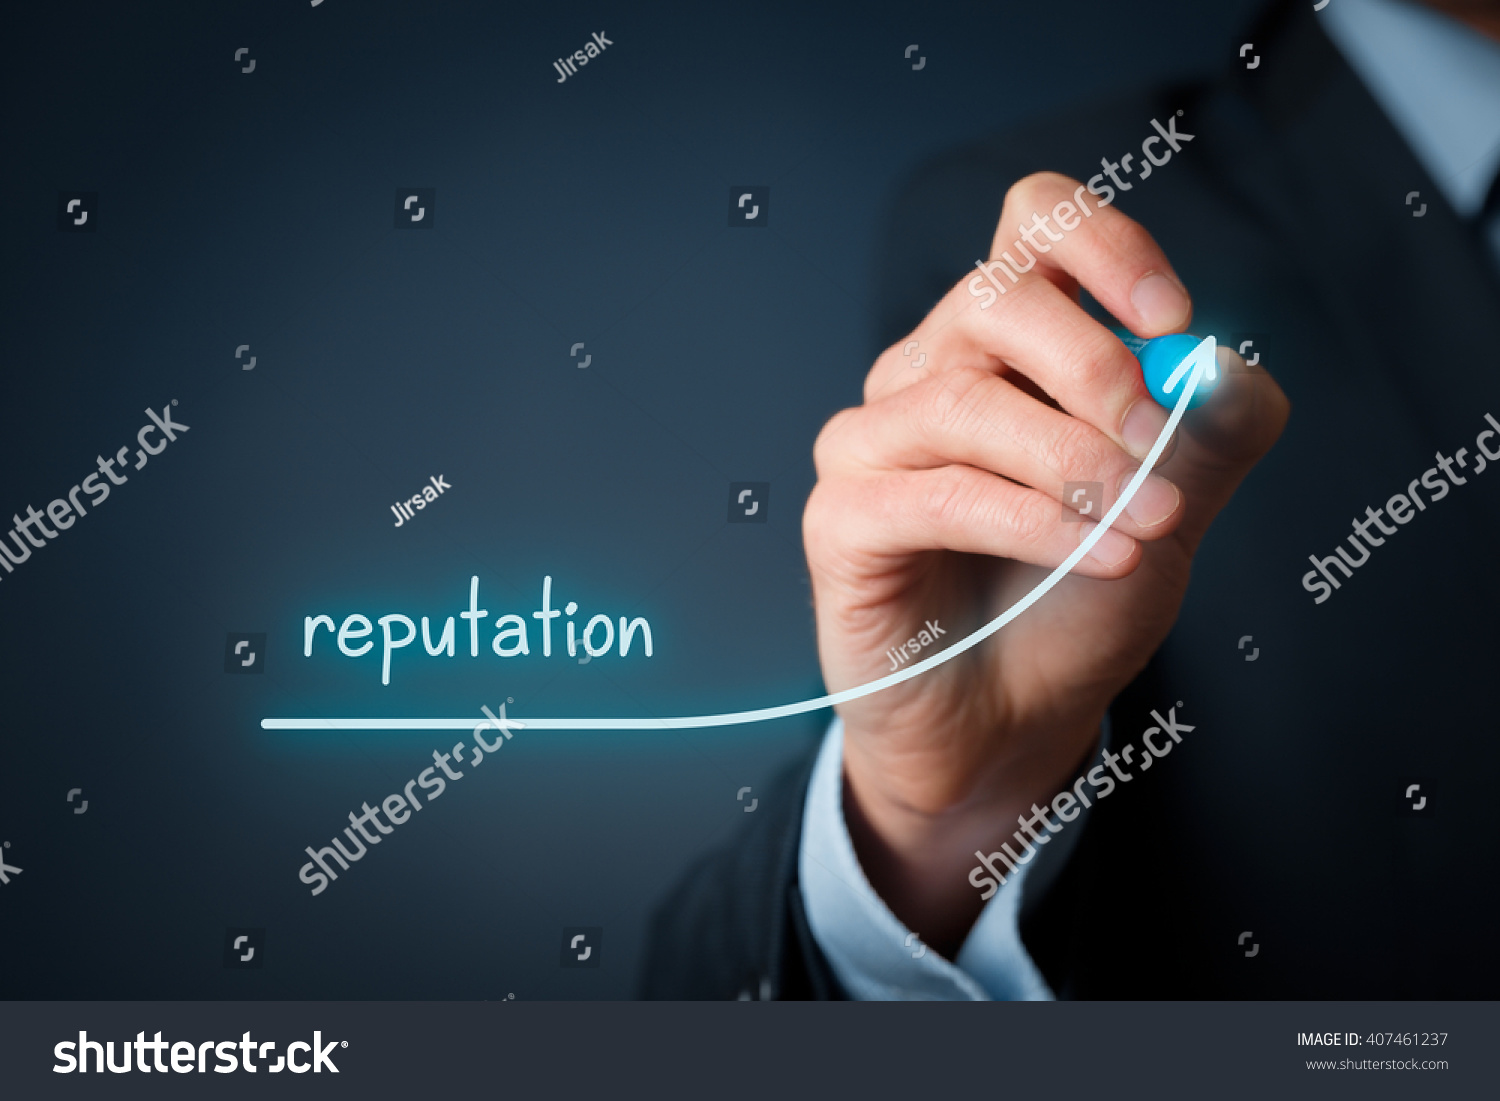 Corporate reputation improvement concept. Businessman (o PR specialist) plan to improve reputation of his company.
 #407461237